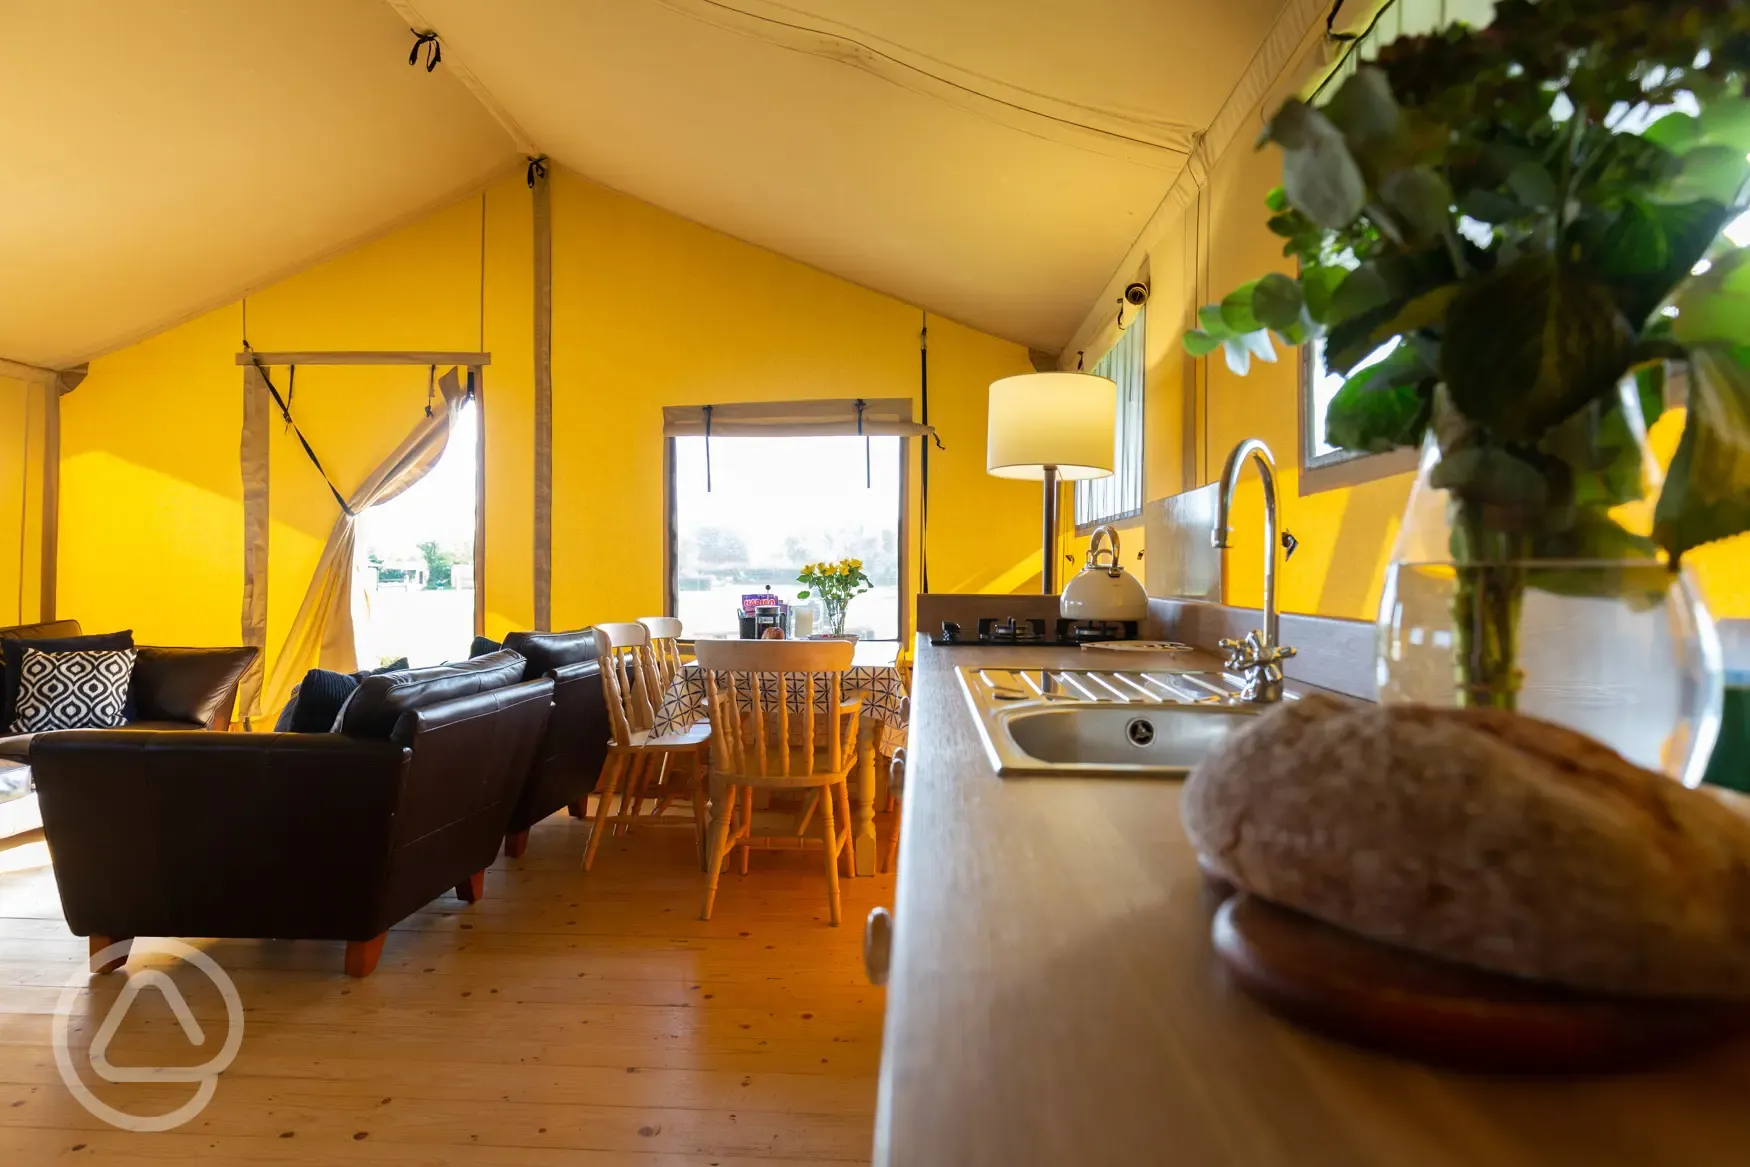 Large Fully Equipped Luxury Safari tents design for maximum comfort sleeps 5